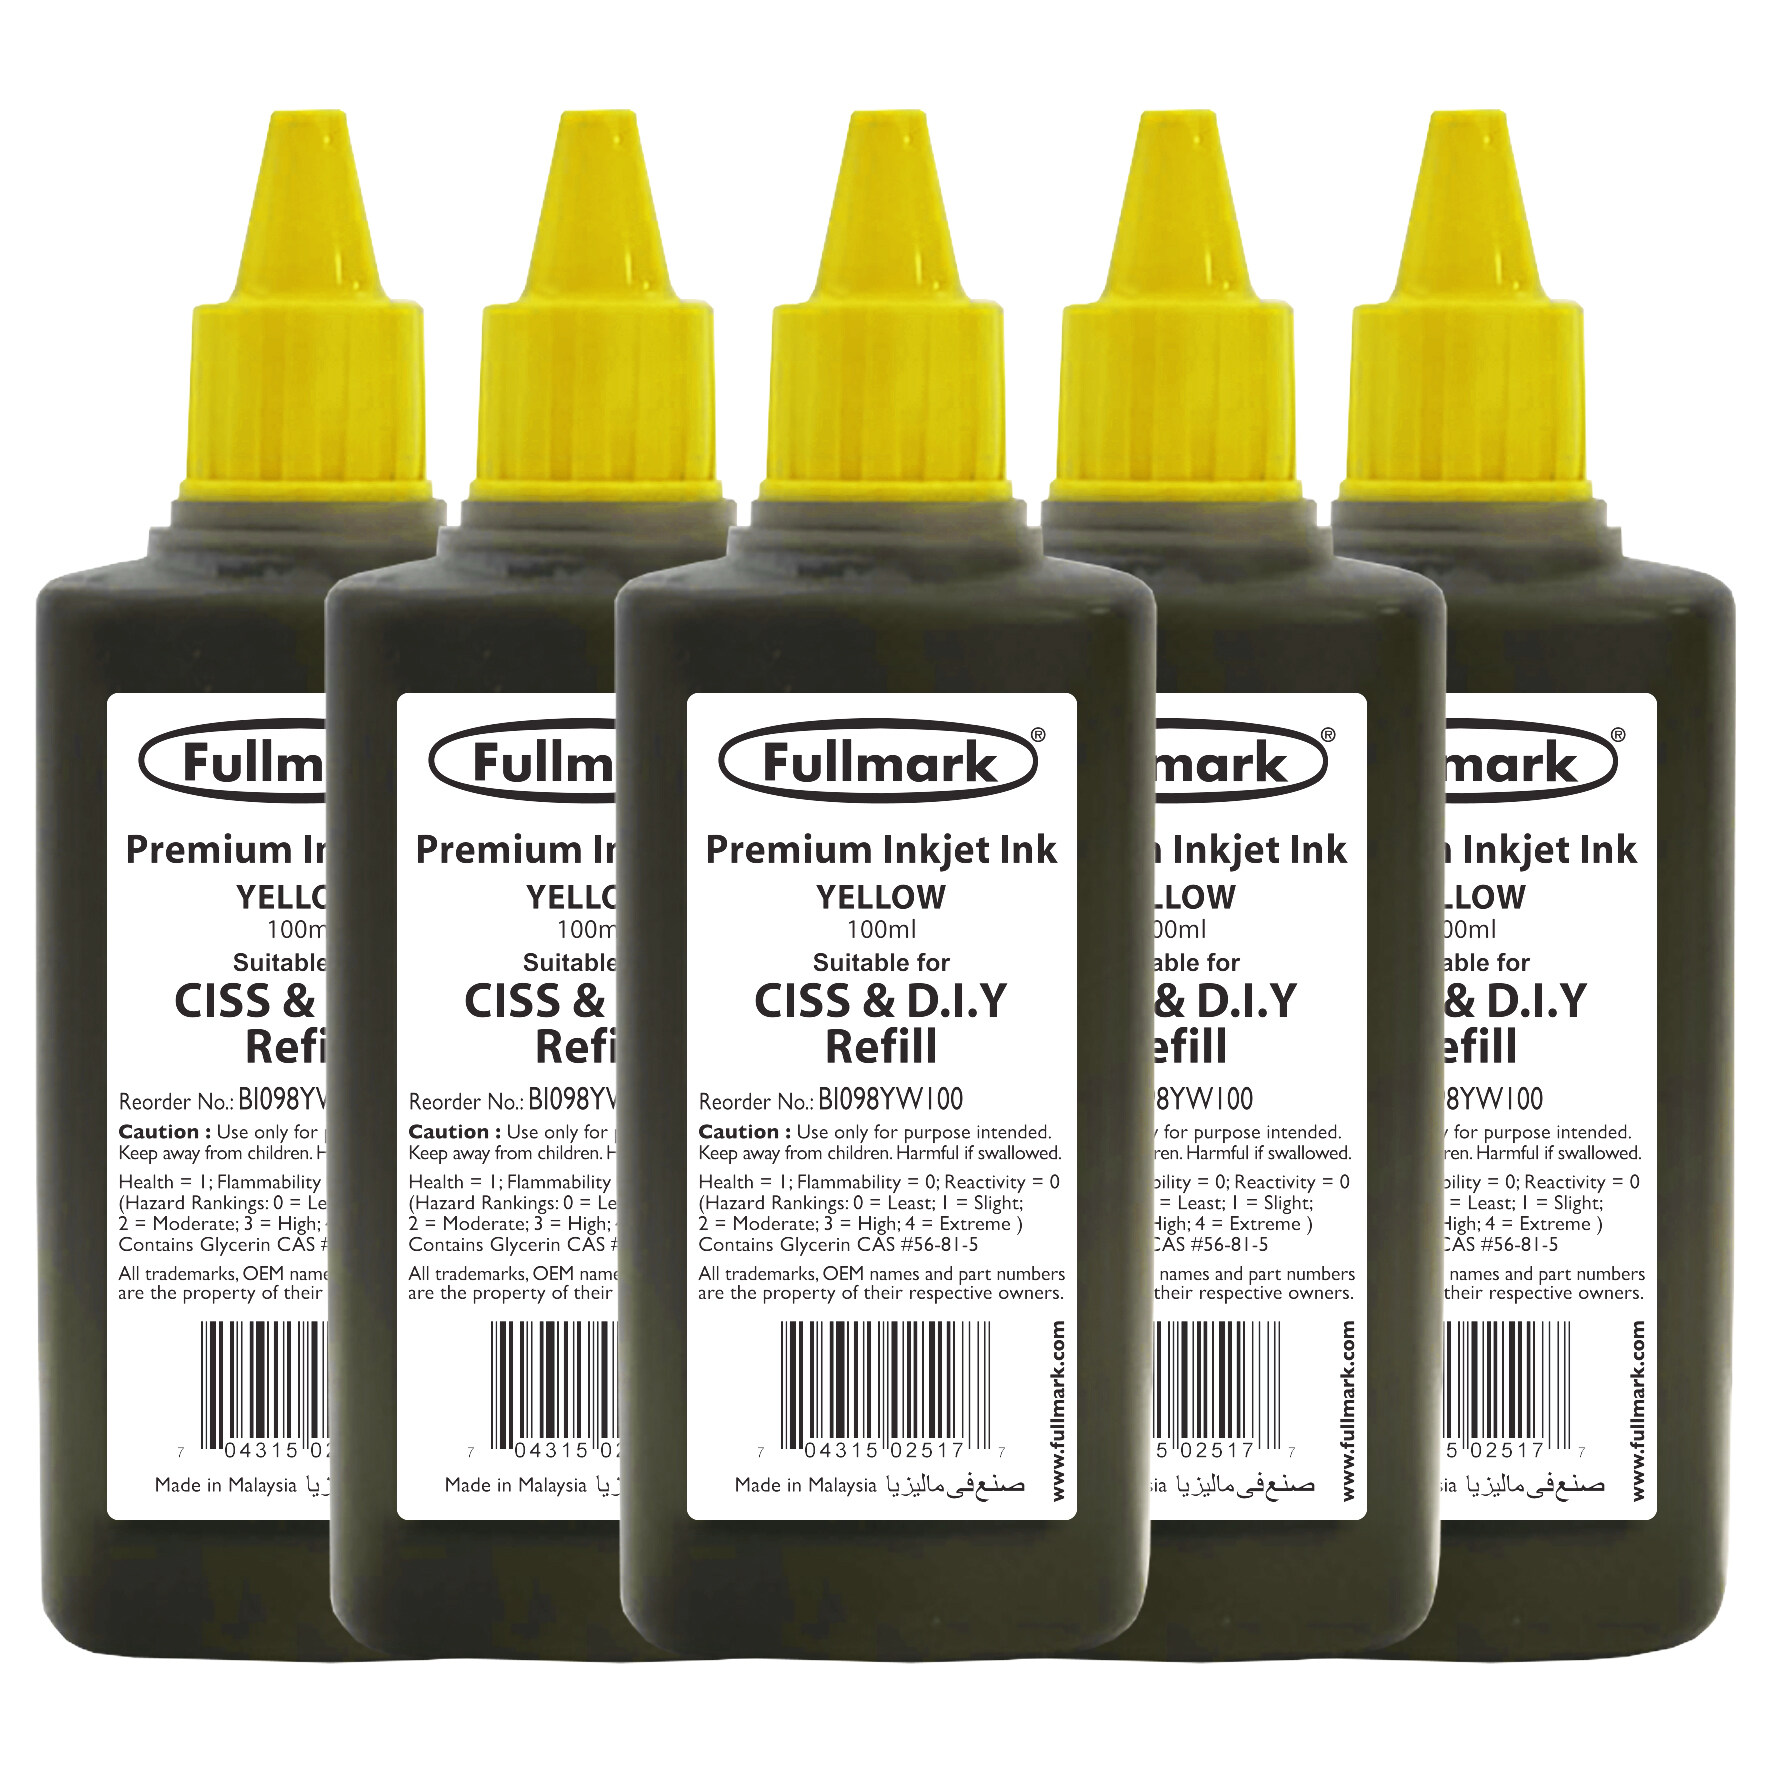 Fullmark Universal Inkjet Ink Refill for Canon / HP / Epson / Brother / Lexmark Printer, 5 x 100ml - Yellow (BI099)